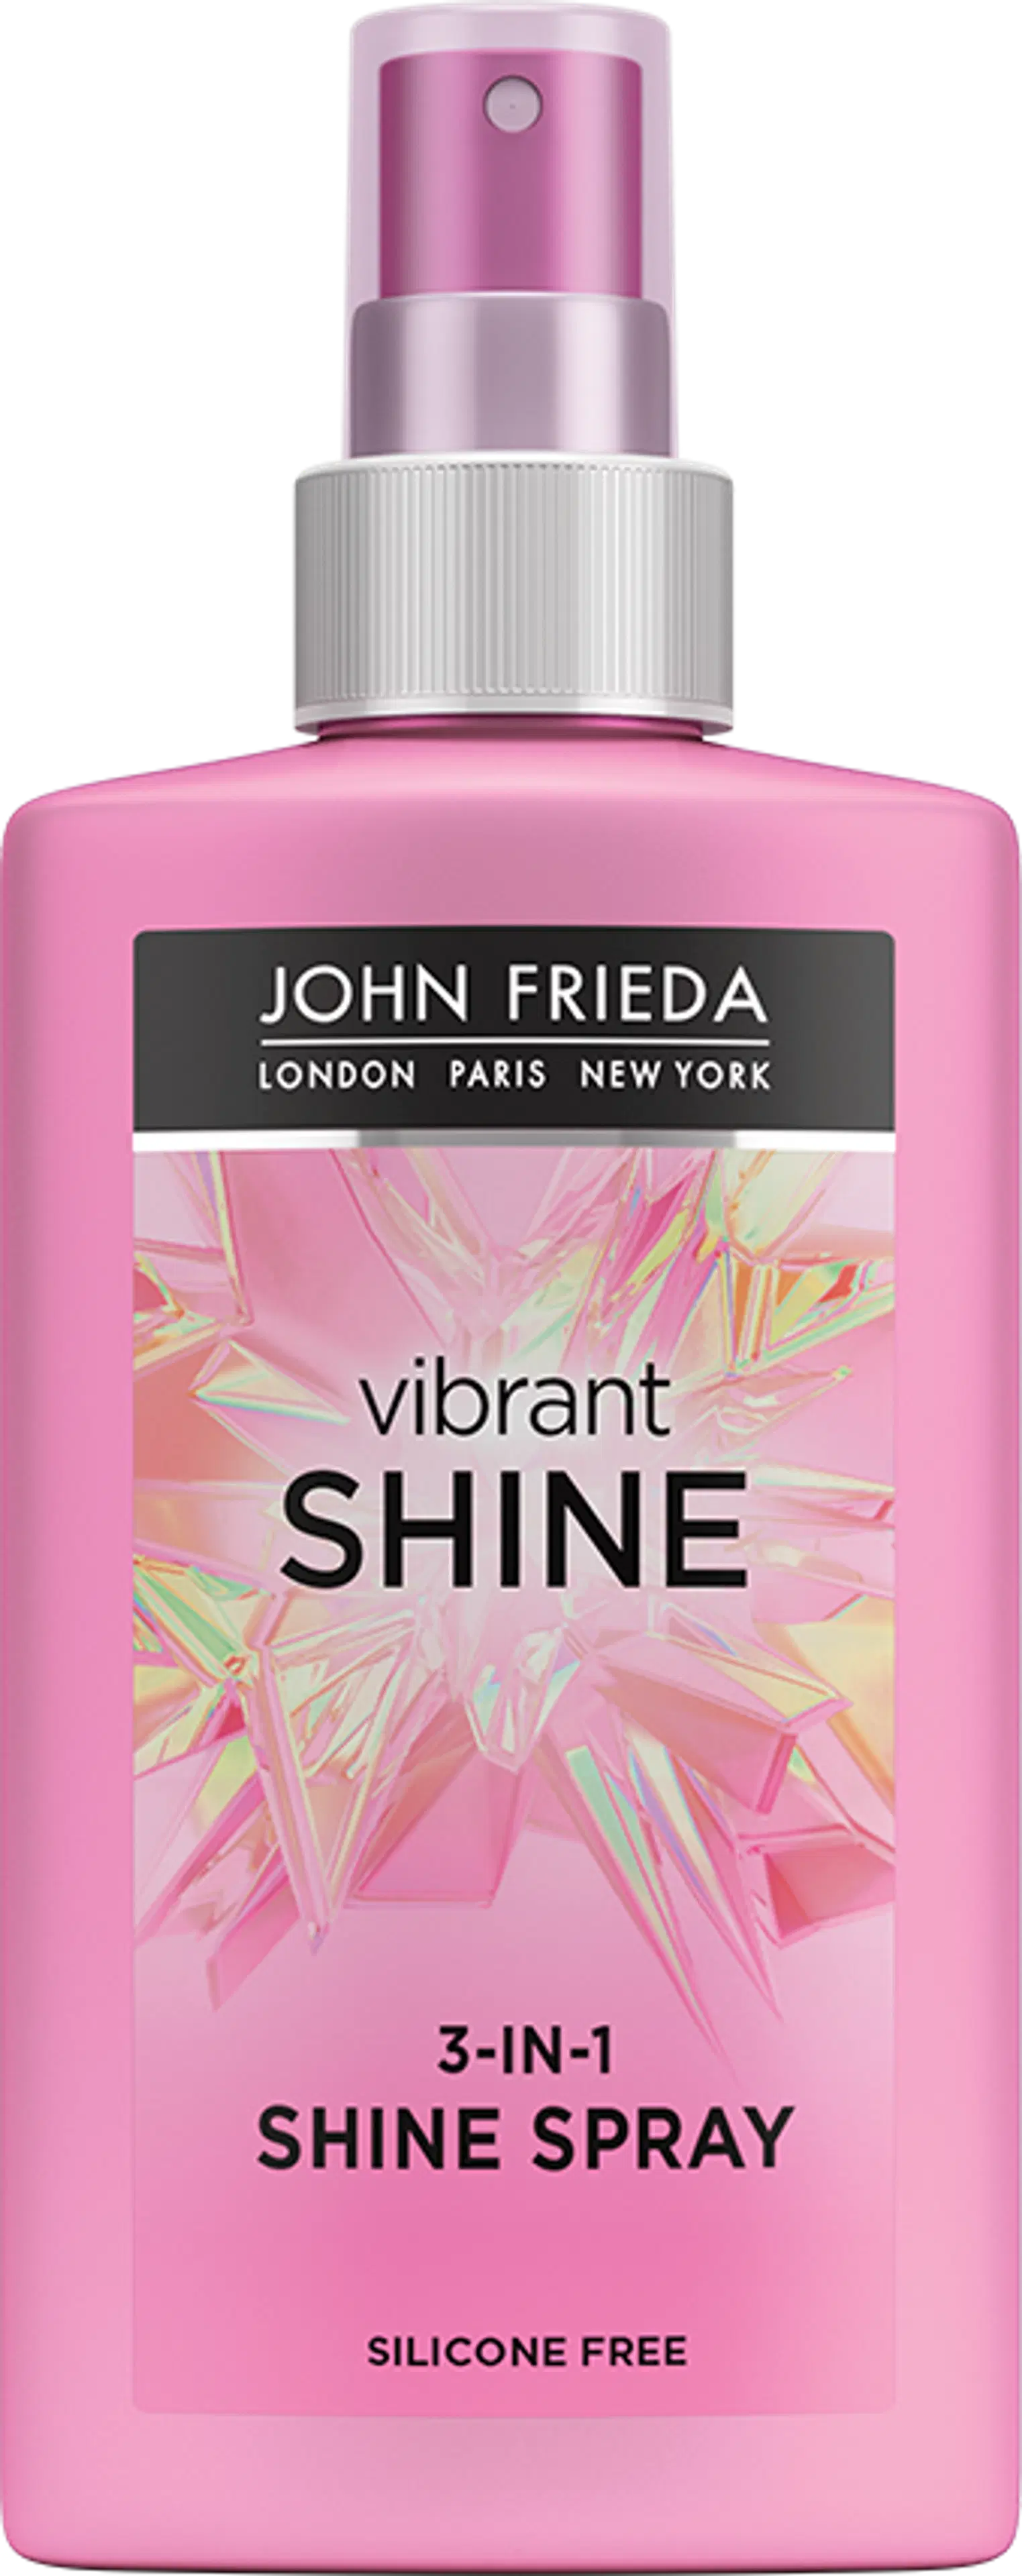 John Frieda Vibrant Shine 3-in-1 Shine Spray hoitosuihke 150 ml